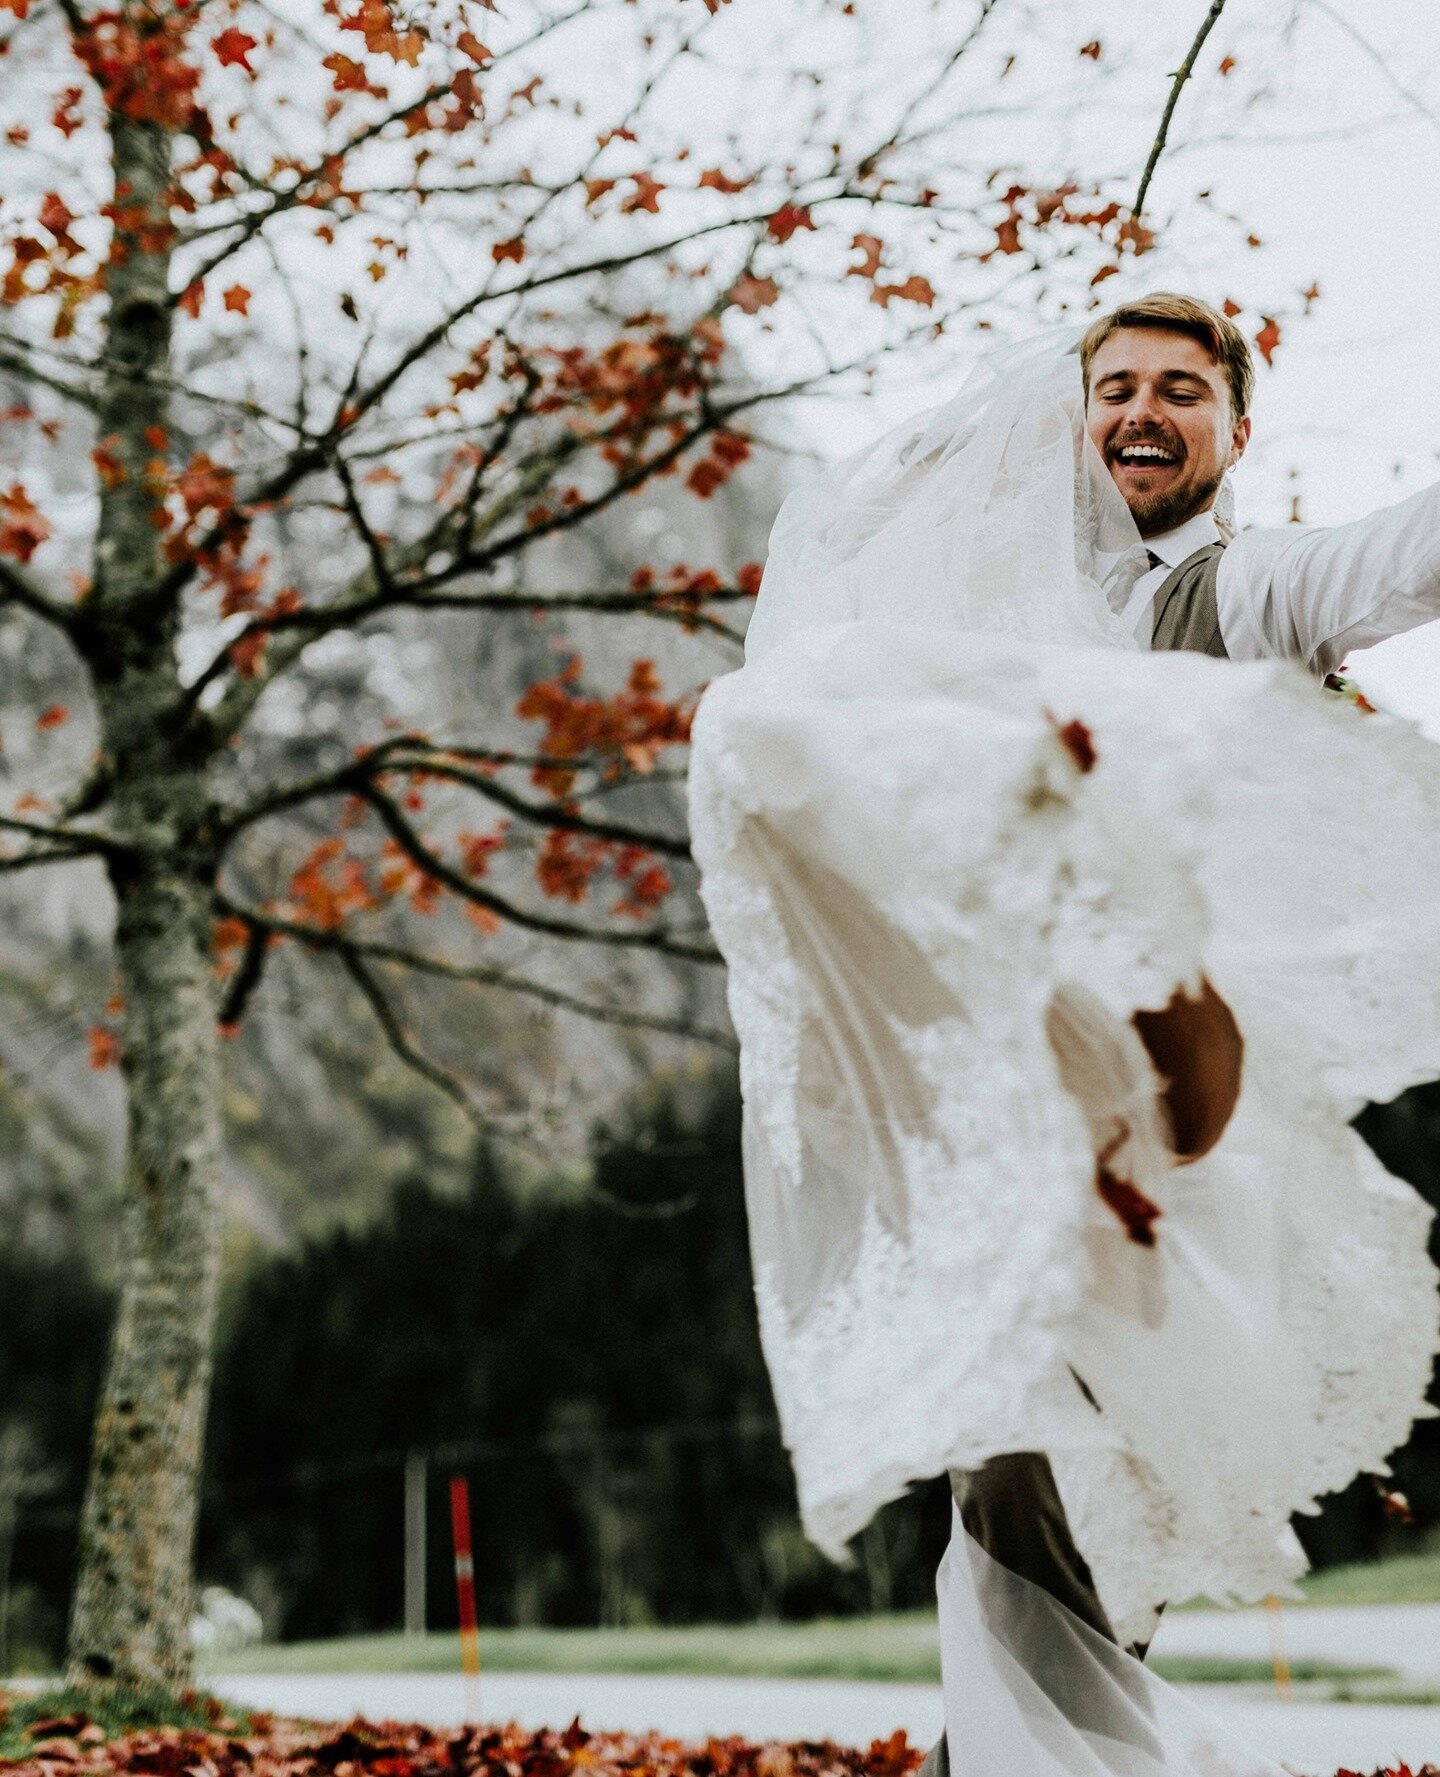 En veldig lykkelig ektemann, p&aring; en veldig vakker dag i Eikesdalen 😍 ⁠
.⁠
.⁠
.⁠
.⁠
.⁠
⁠
#wedding #bride #weddingdress #weddingphotography #weddingday #weddinginspiration #weddingplanner #prewedding #bridal #bridetobe #weddingphotographer #groom